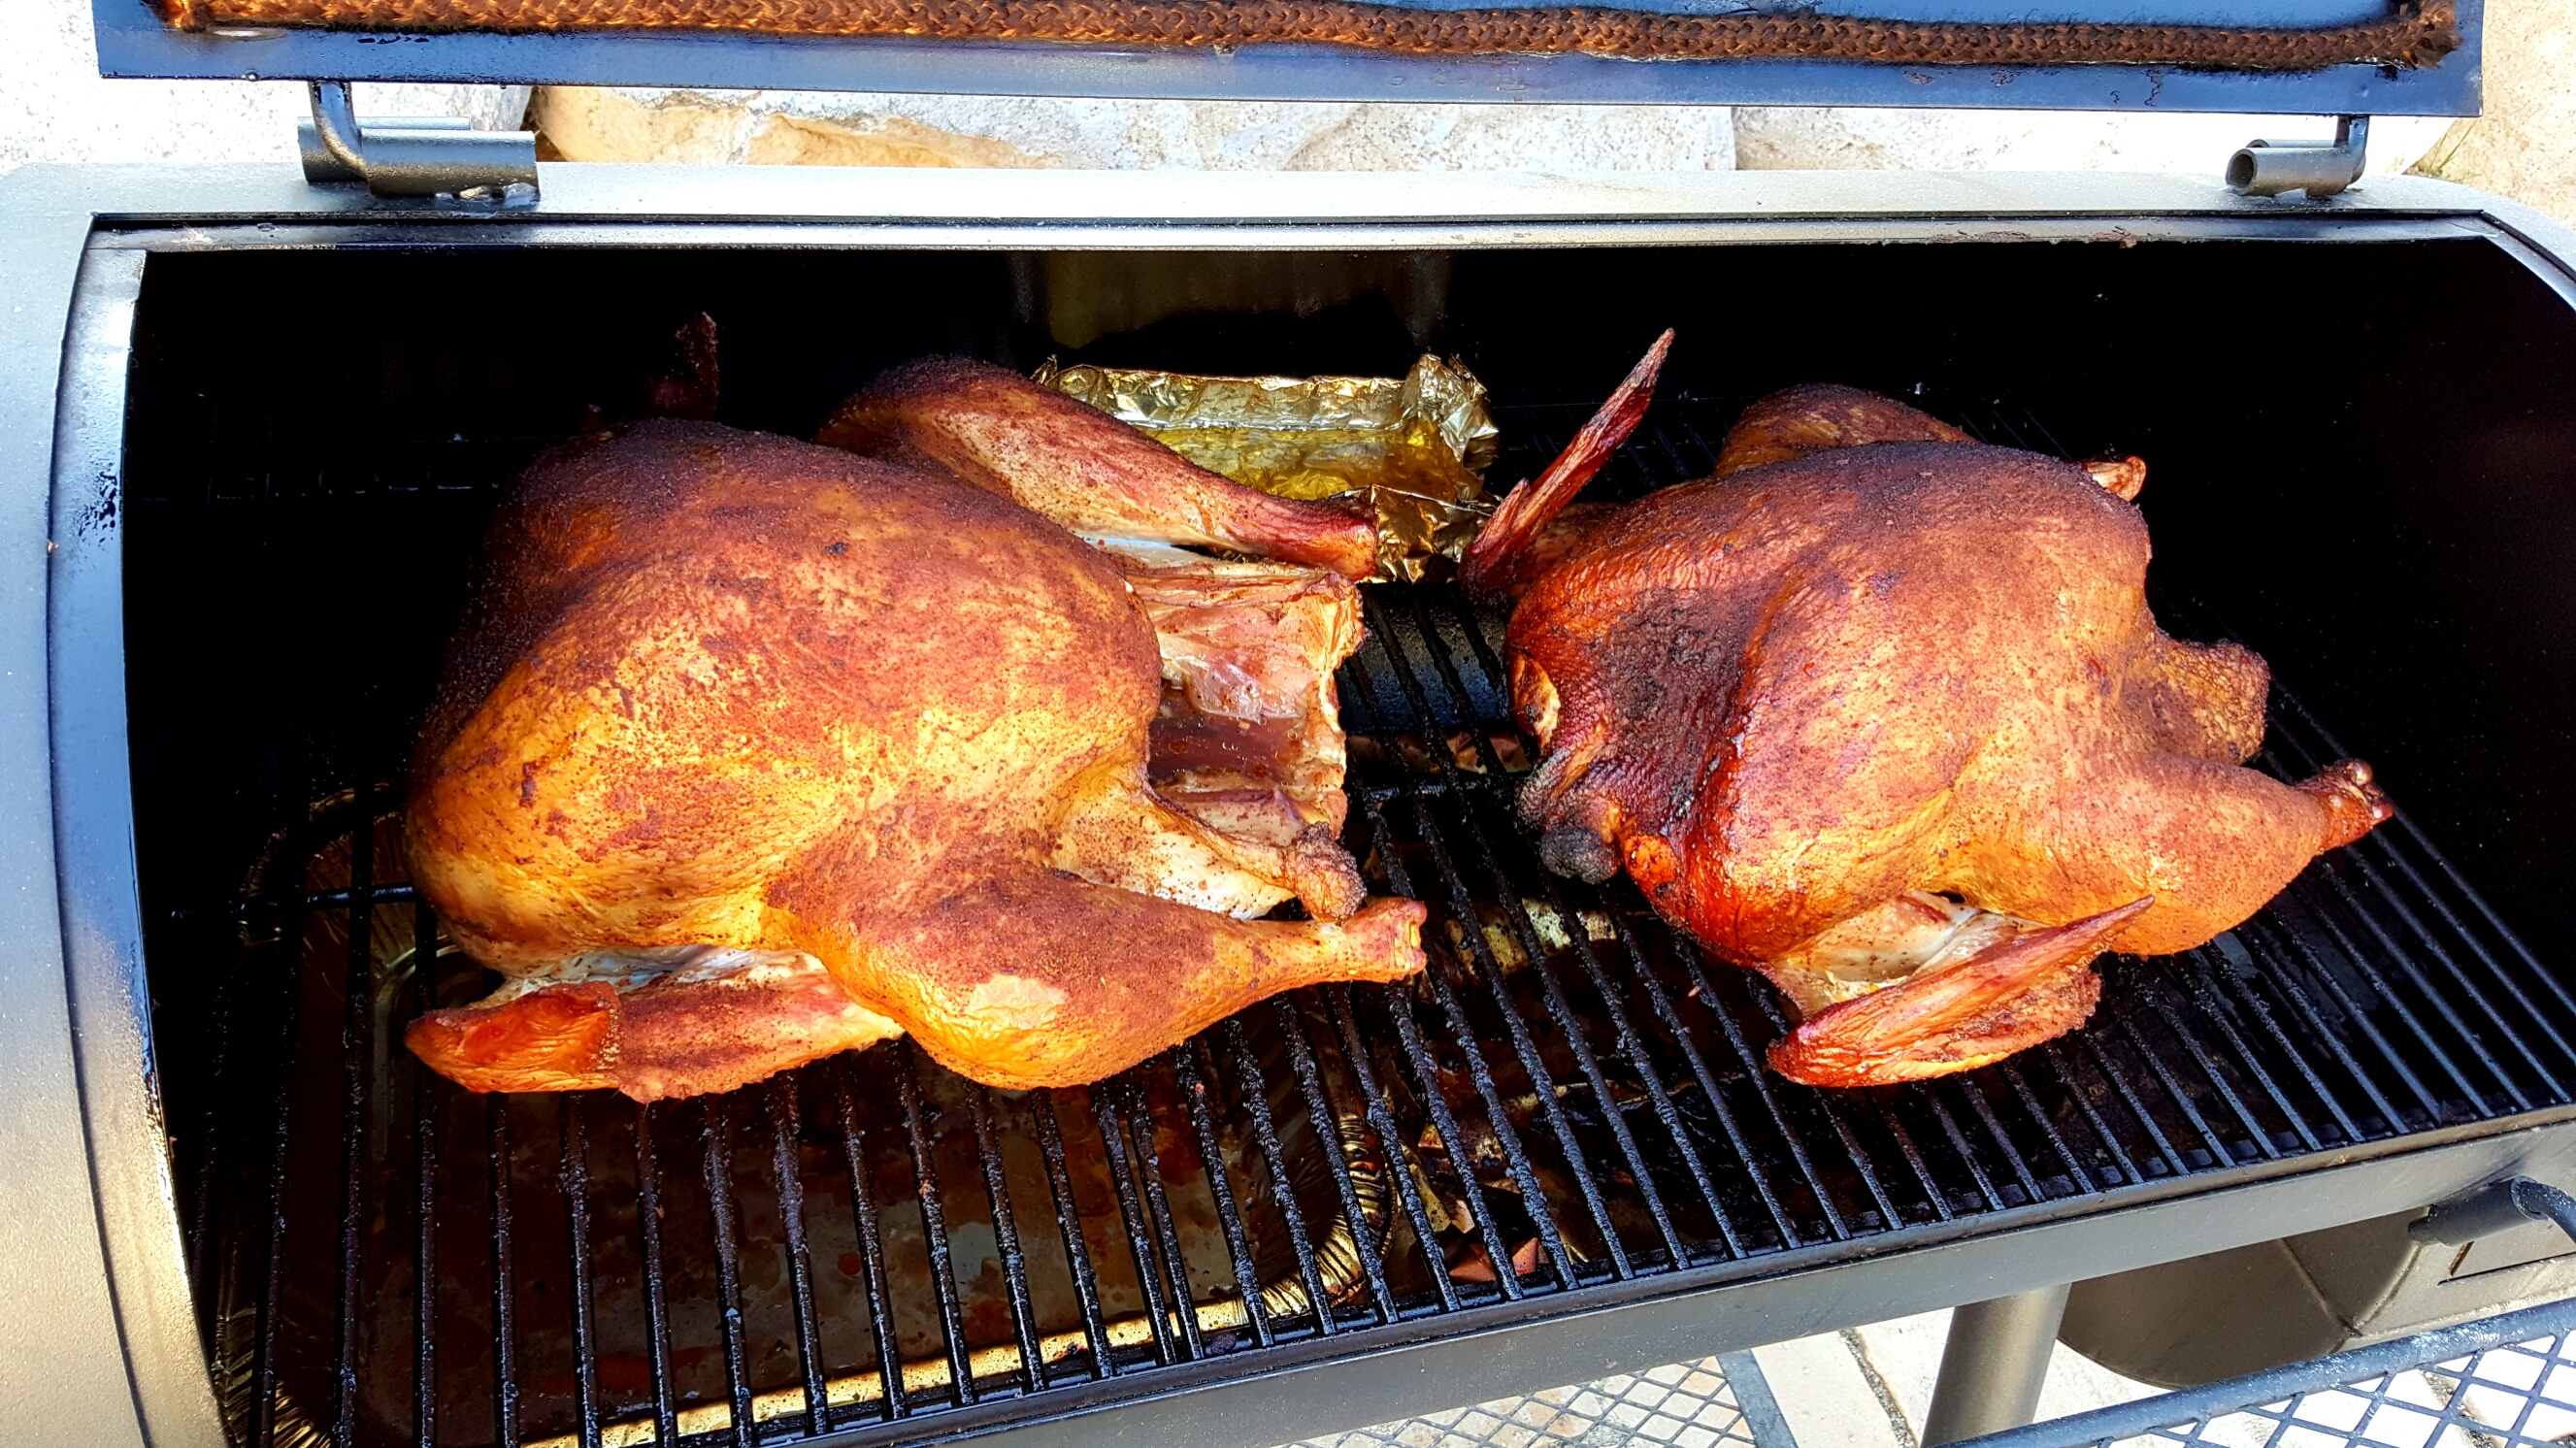 Smoked Turkey experiment